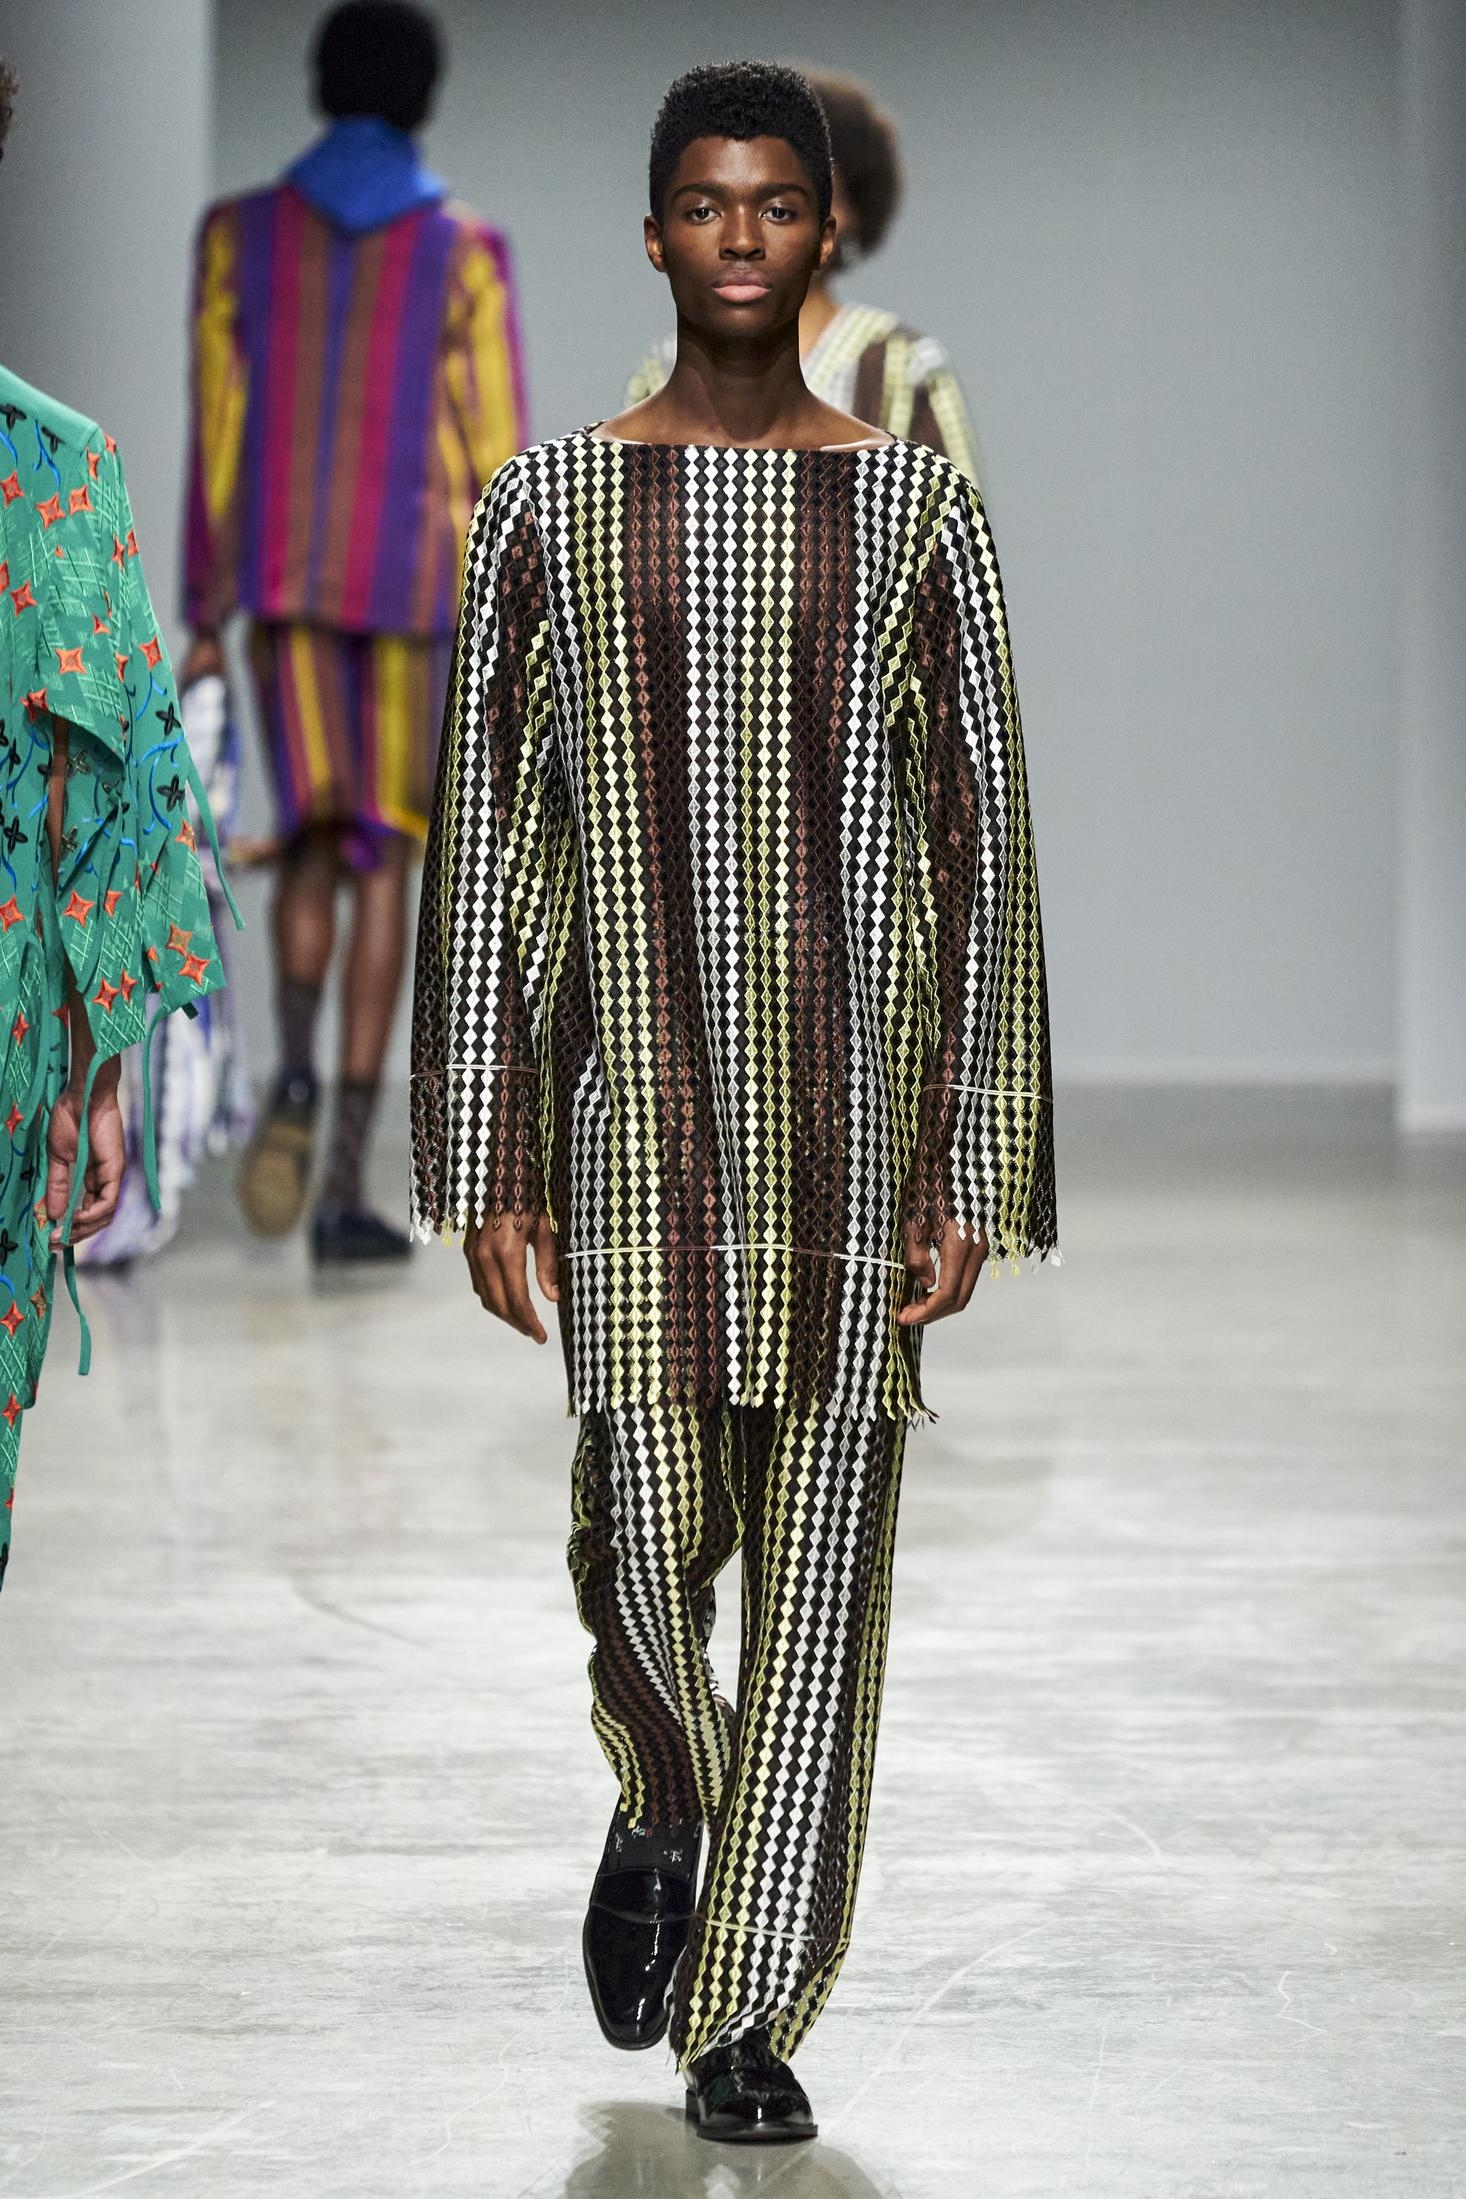 Illuminating Black culture’s influence on fashion | EDITED | Retail ...